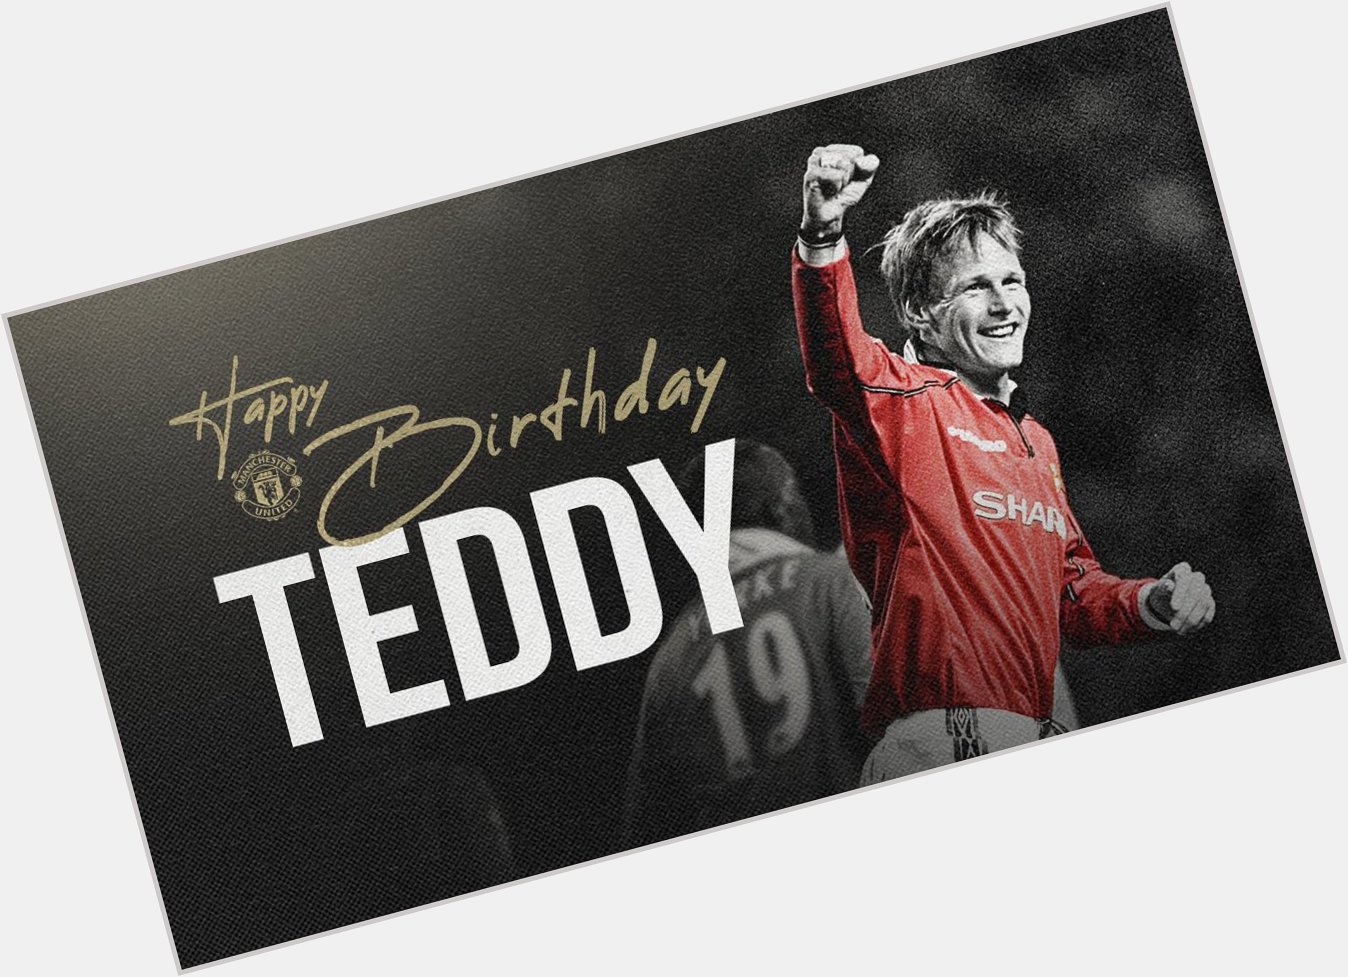 Happy 55th birthday to our former striker Teddy Sheringham!  